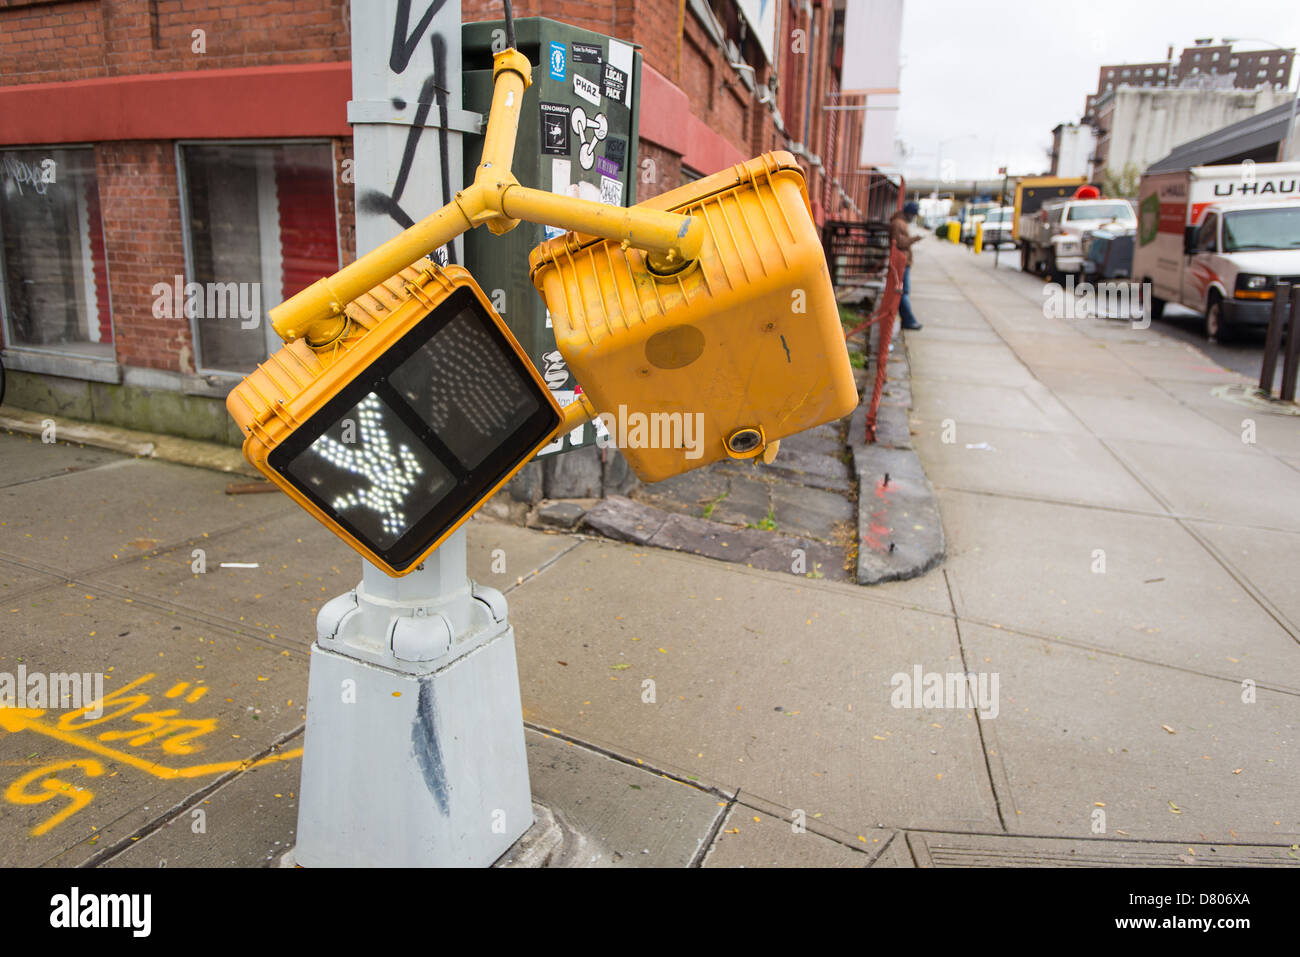 Effects of Hurricane Sandy. Broken--yet still working--walking signal on Flushing Ave., Brooklyn, NYC, Oct 30, 2012. Stock Photo